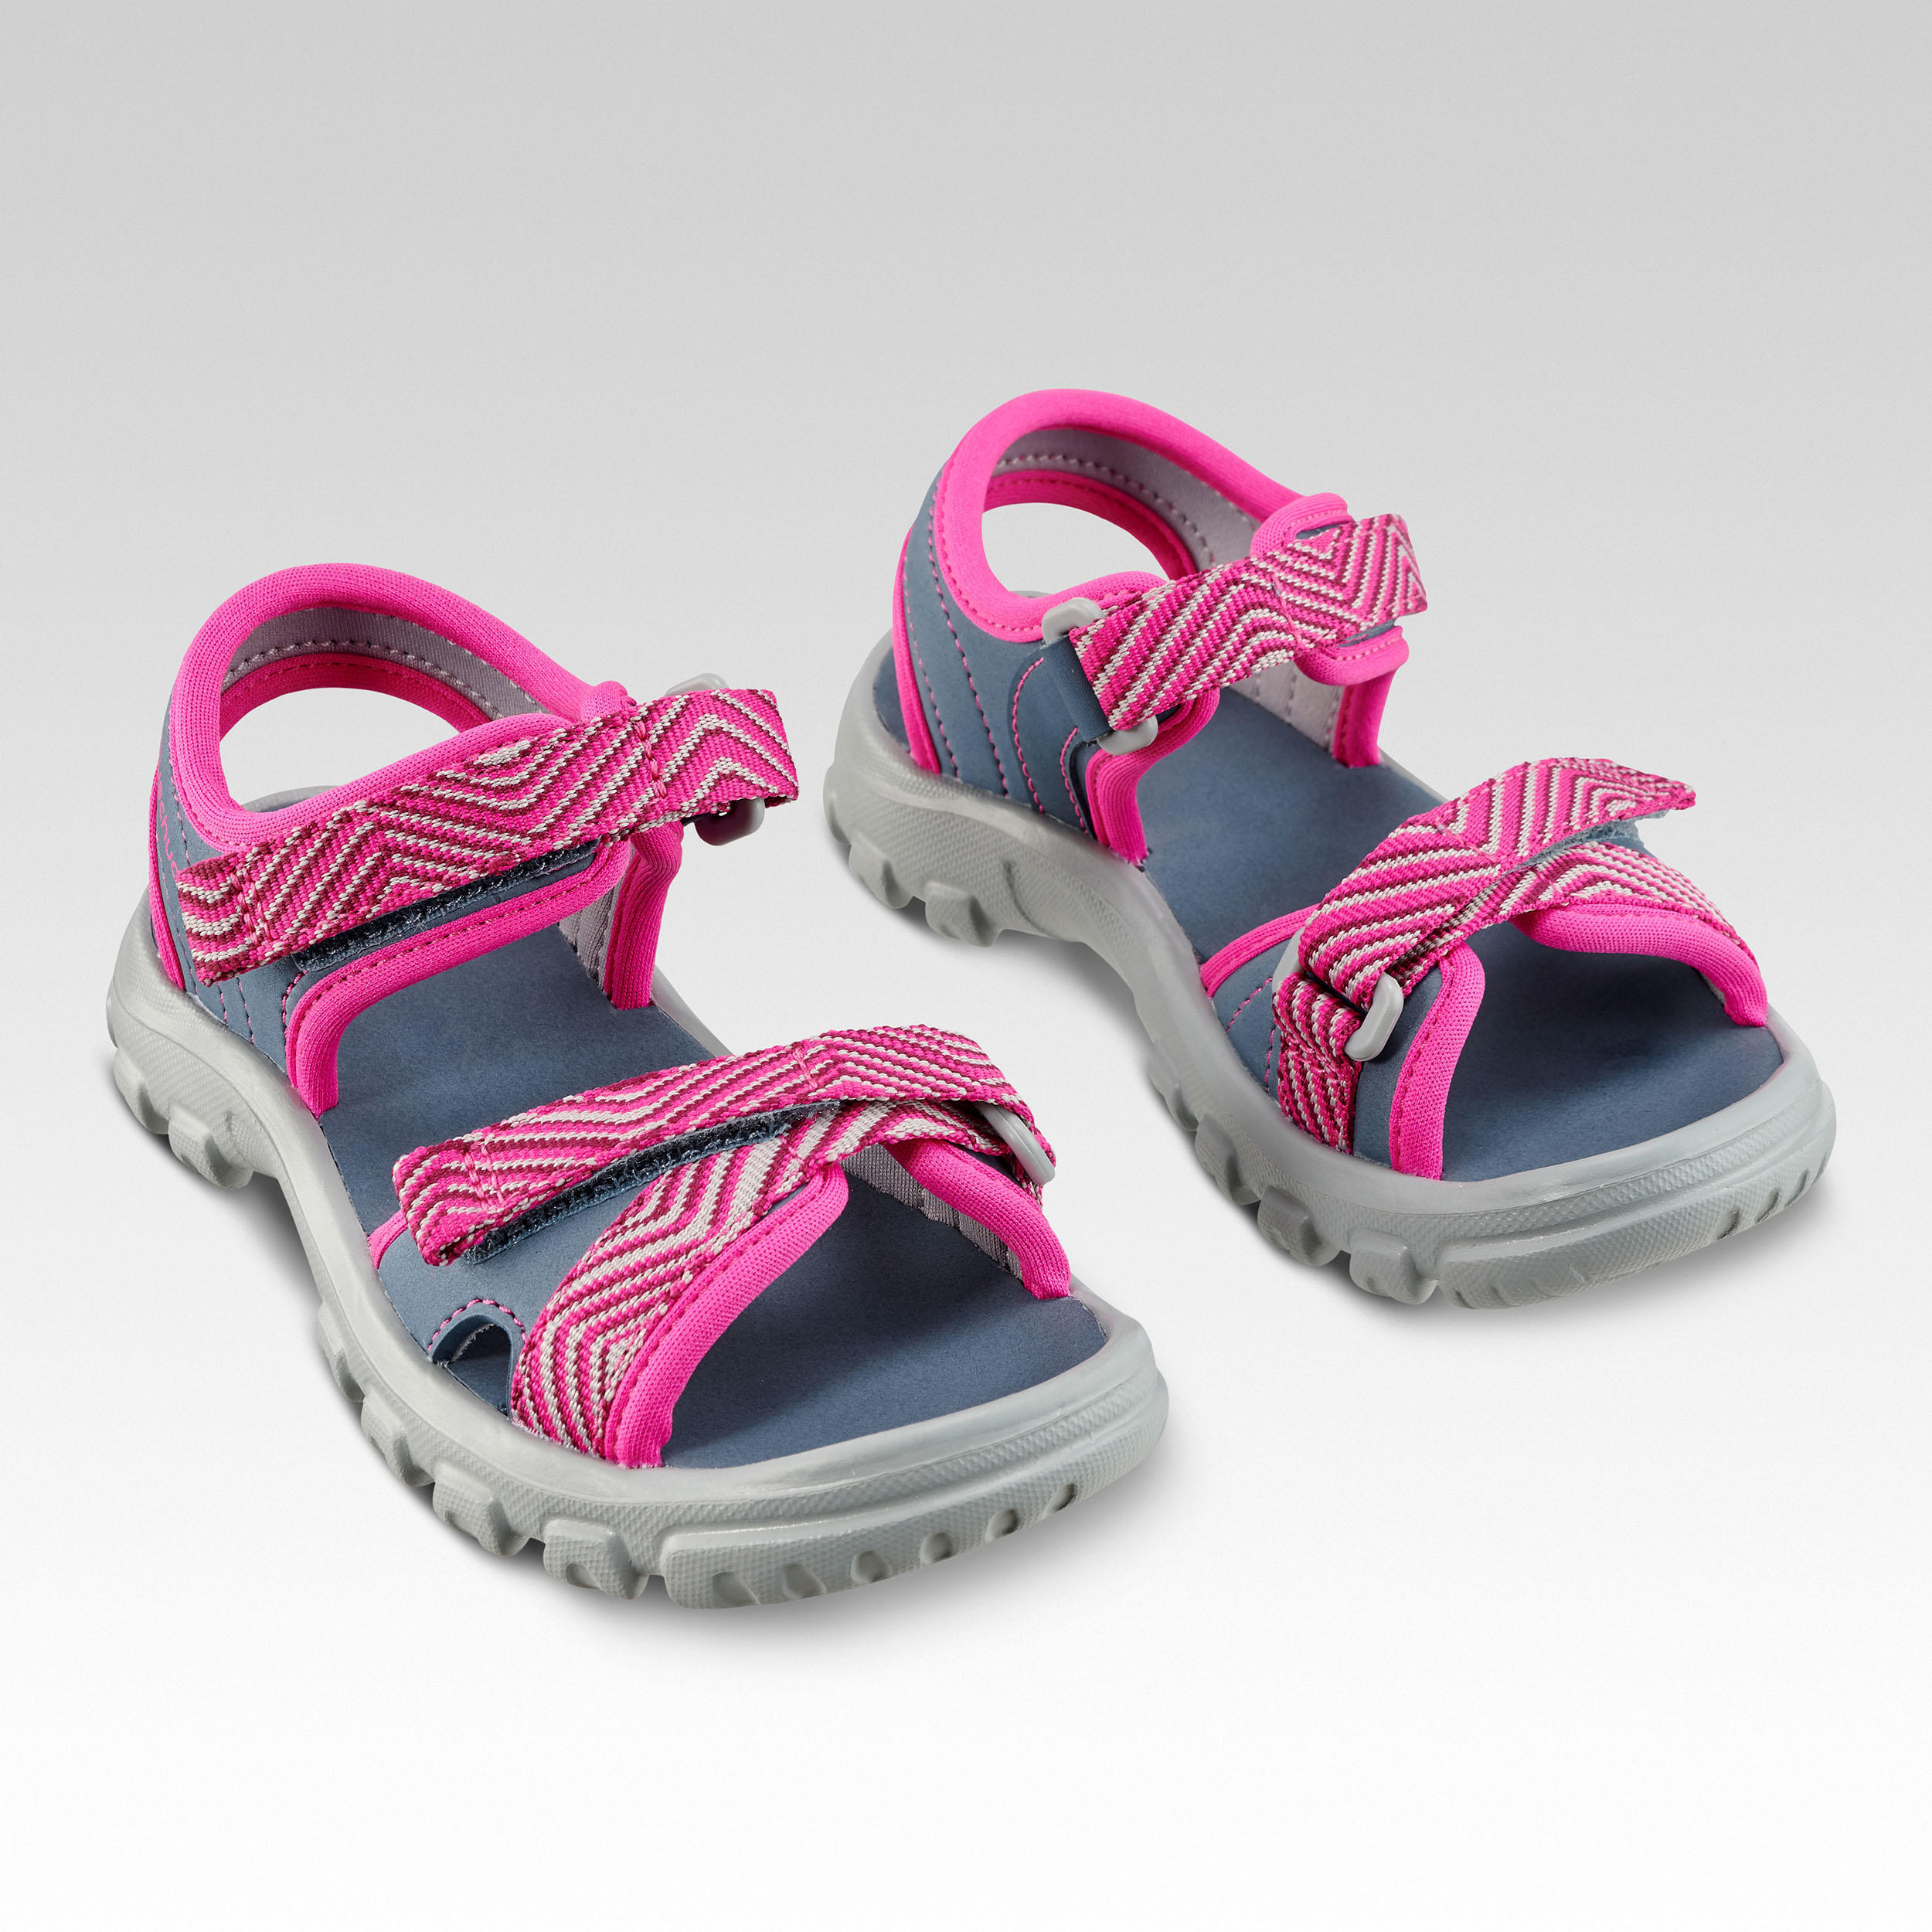 Hiking sandals MH100 KID blue pink - children - Jr size 7 TO 12.5 4/6